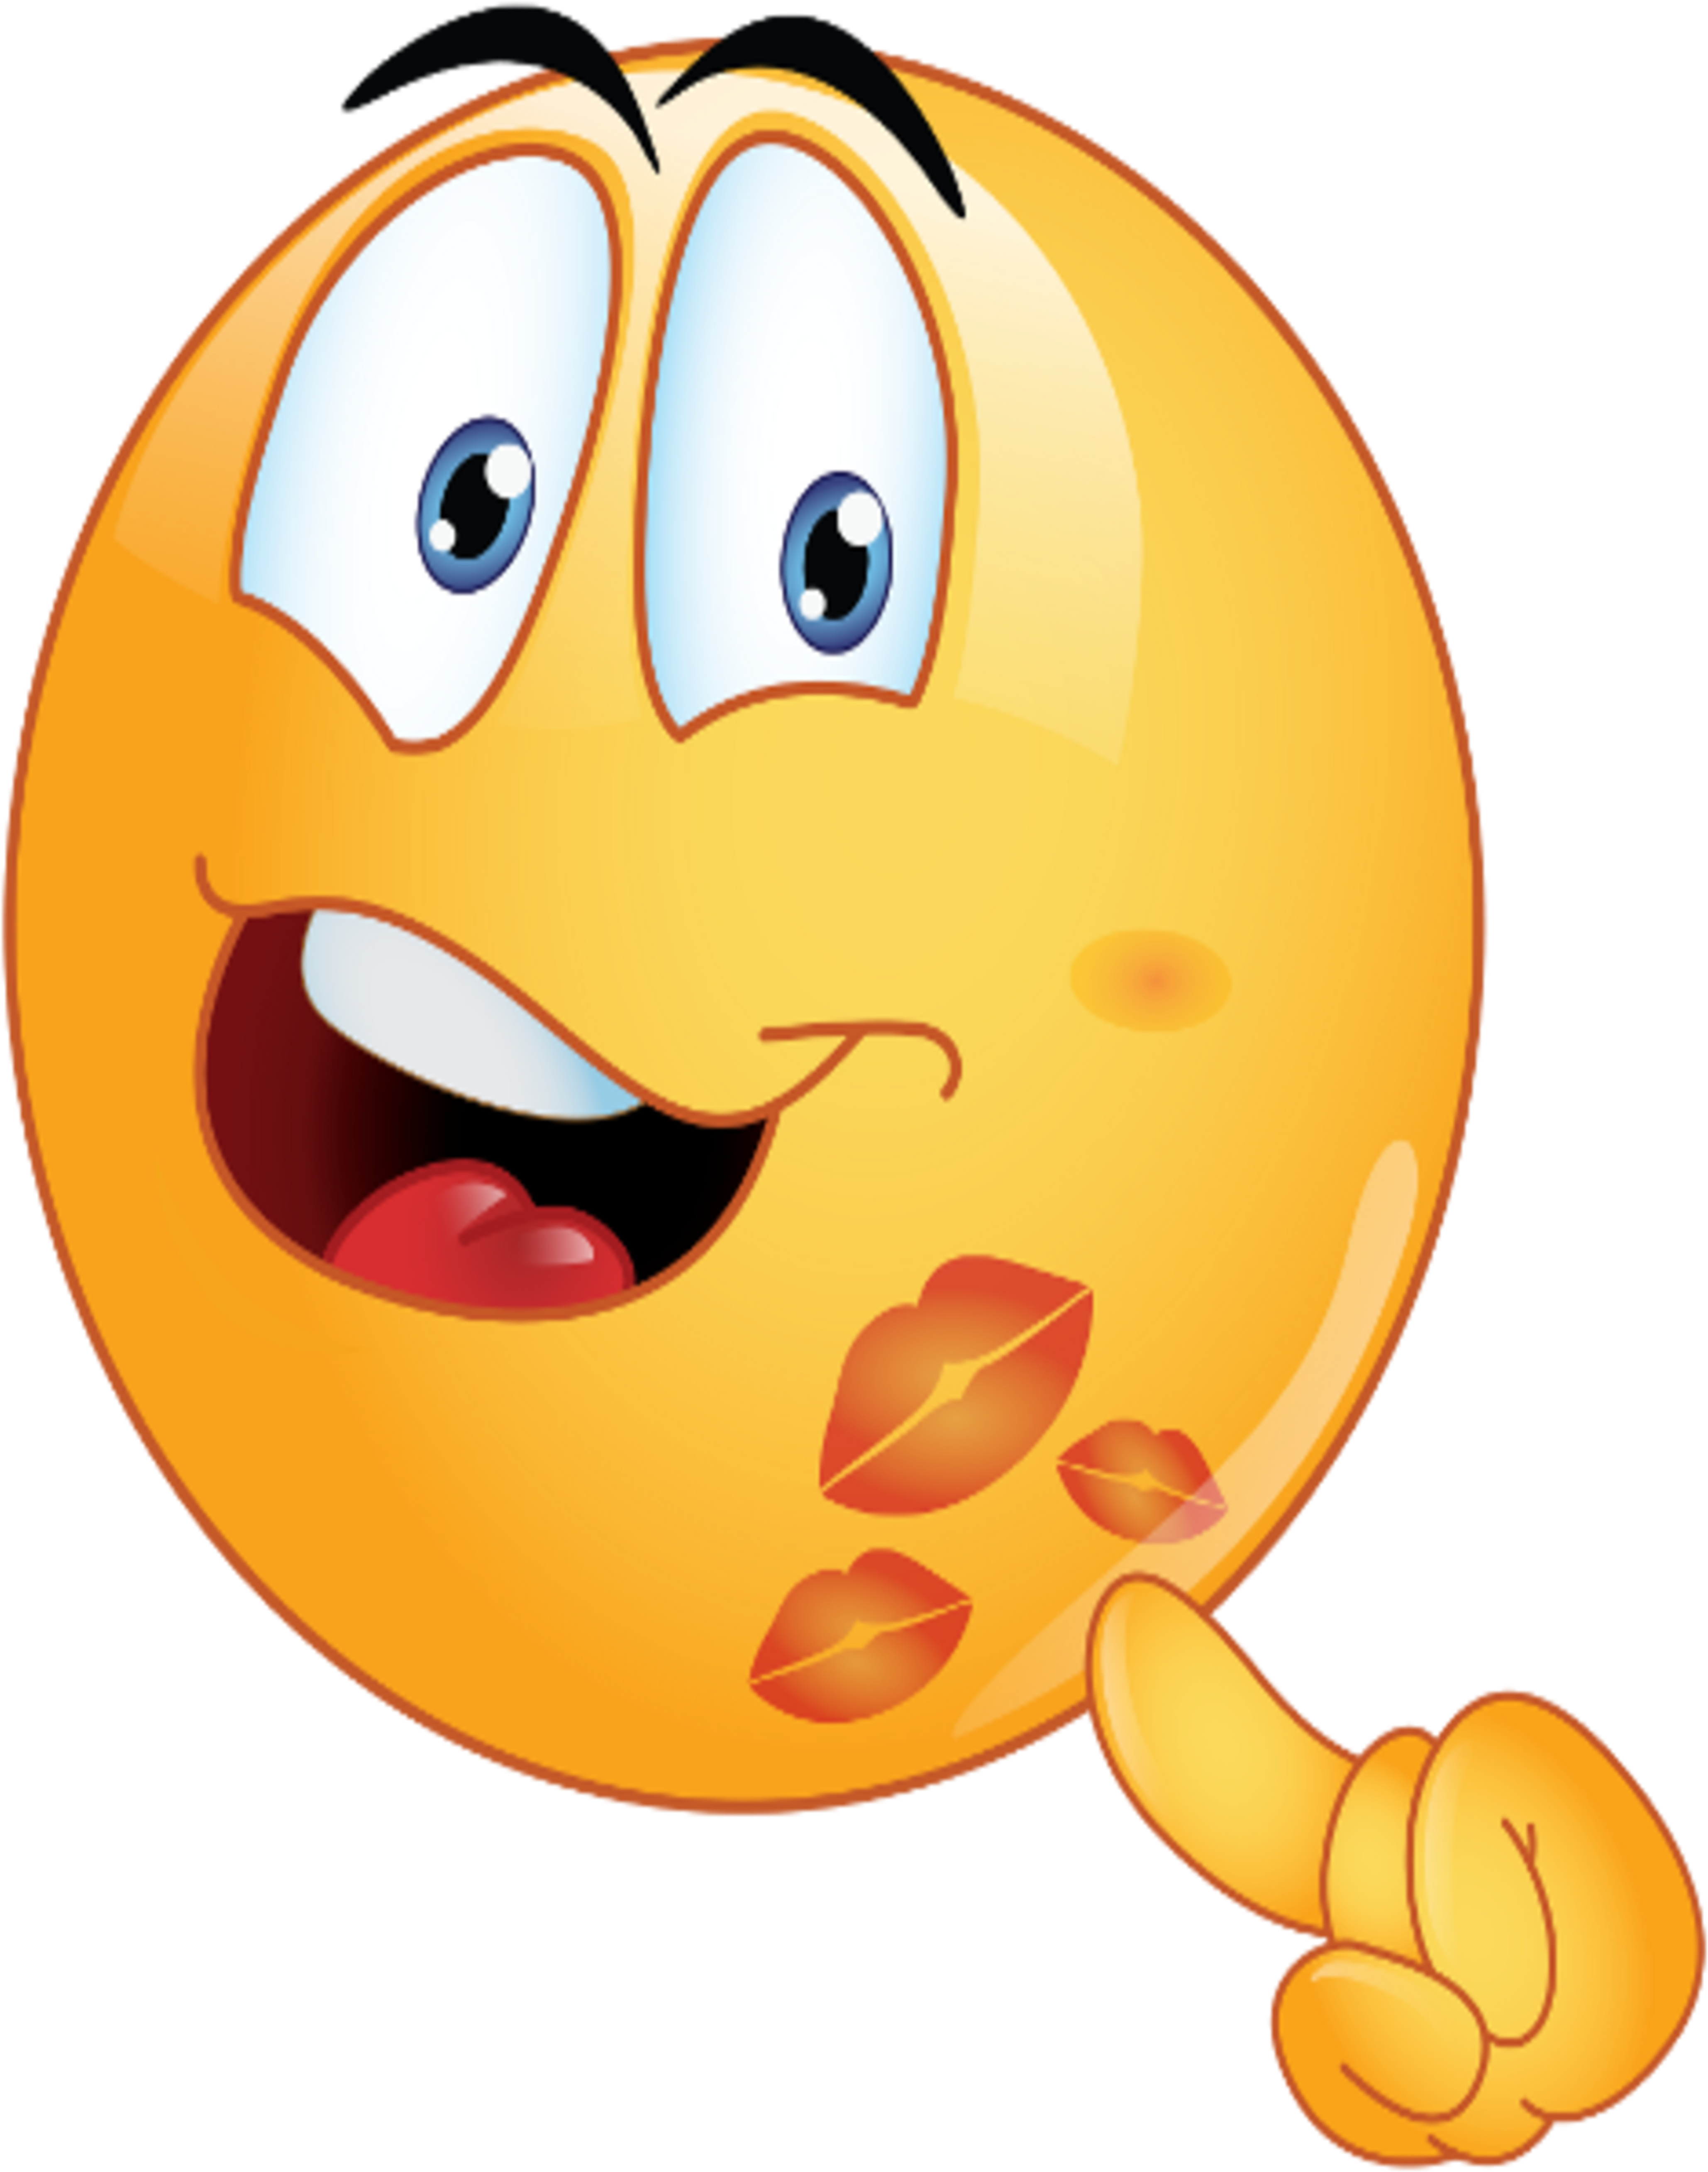 Winking Emoji Giving Thumbs Up PNG image